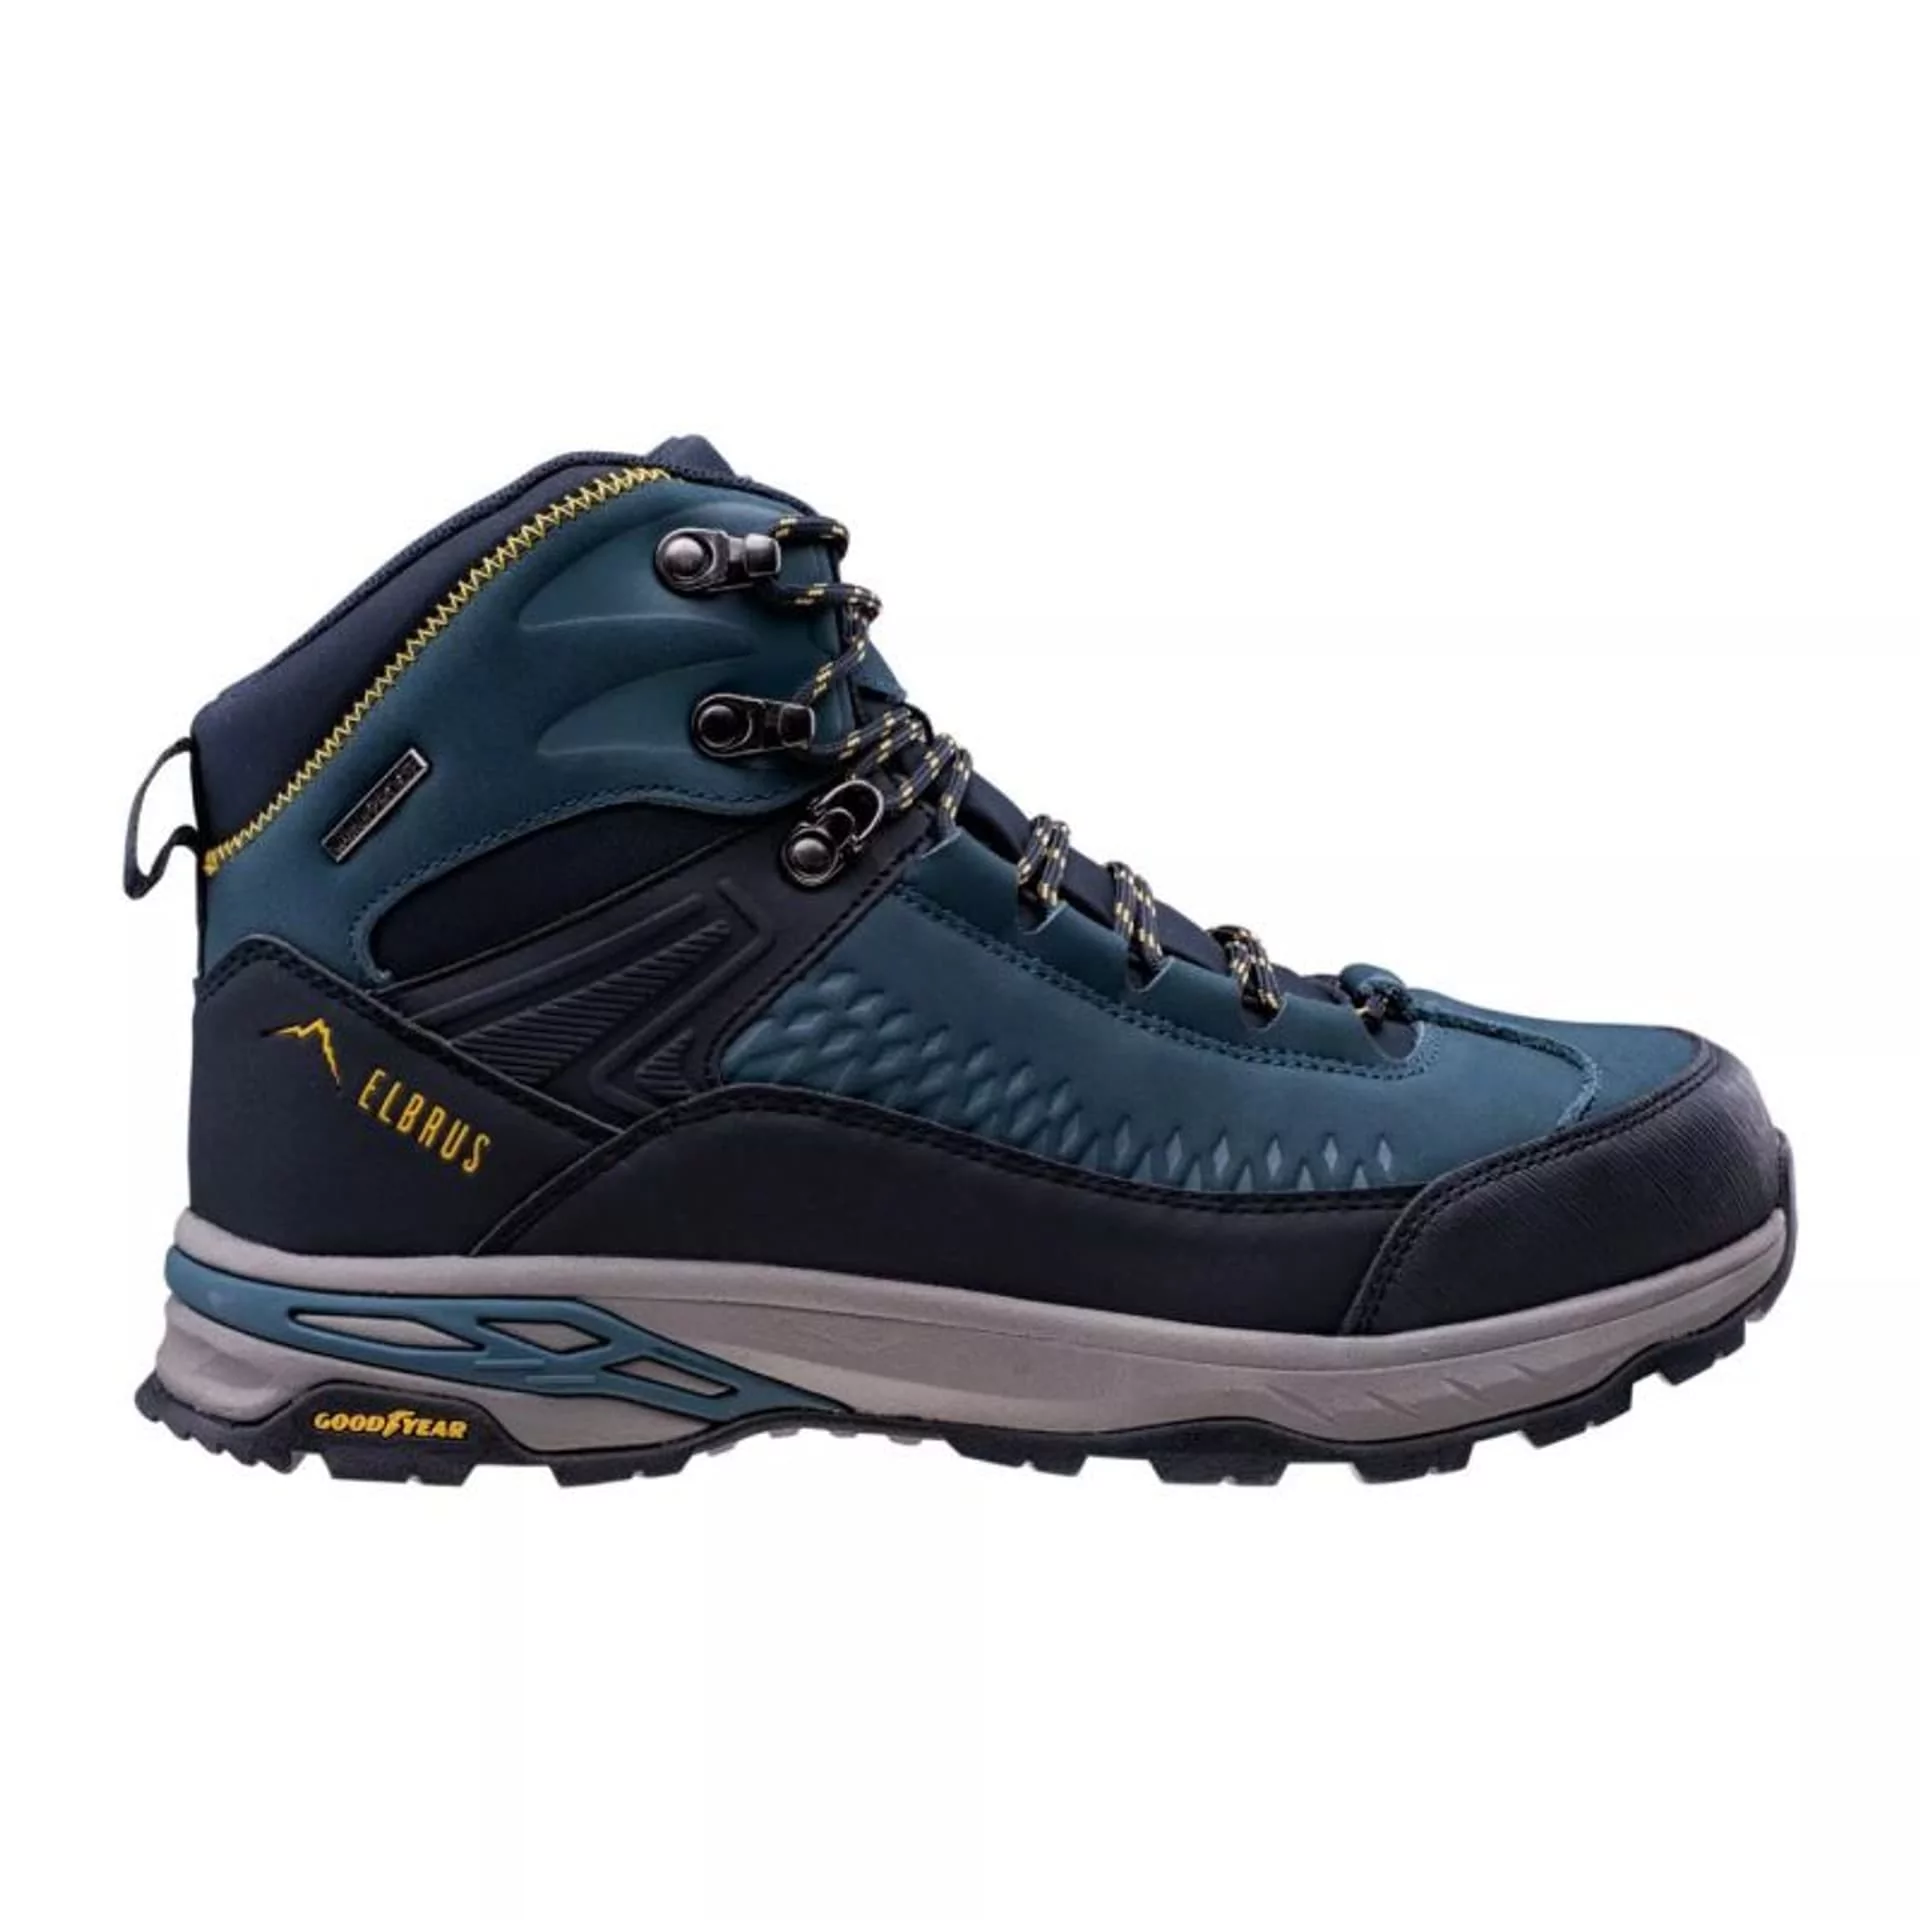 Męskie buty trekkingowe Elbrus Engen MID WP GR granatowe rozmiar 41